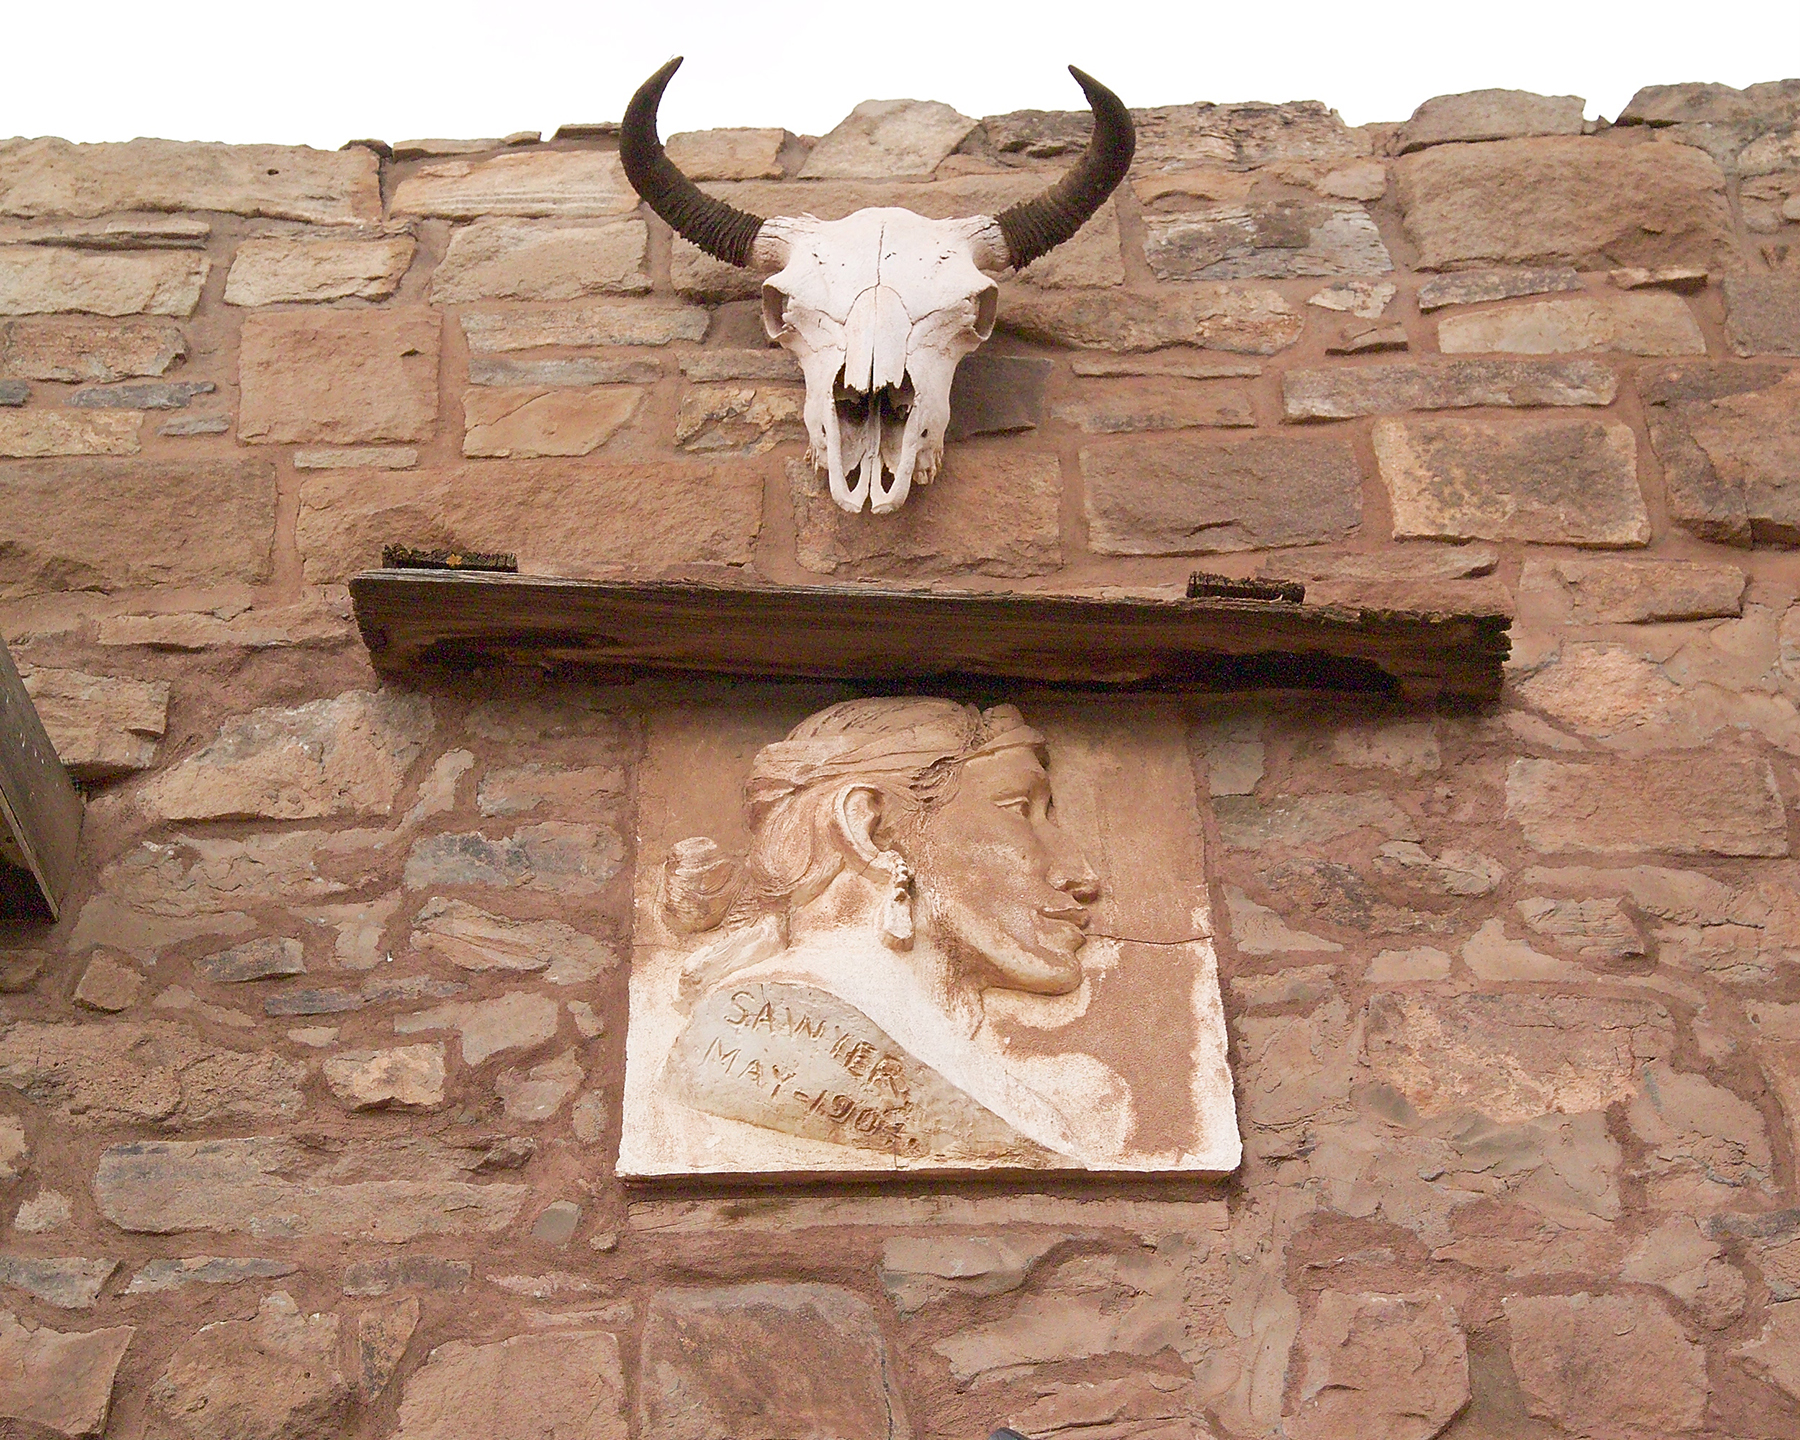 Steer skull greets visitors.